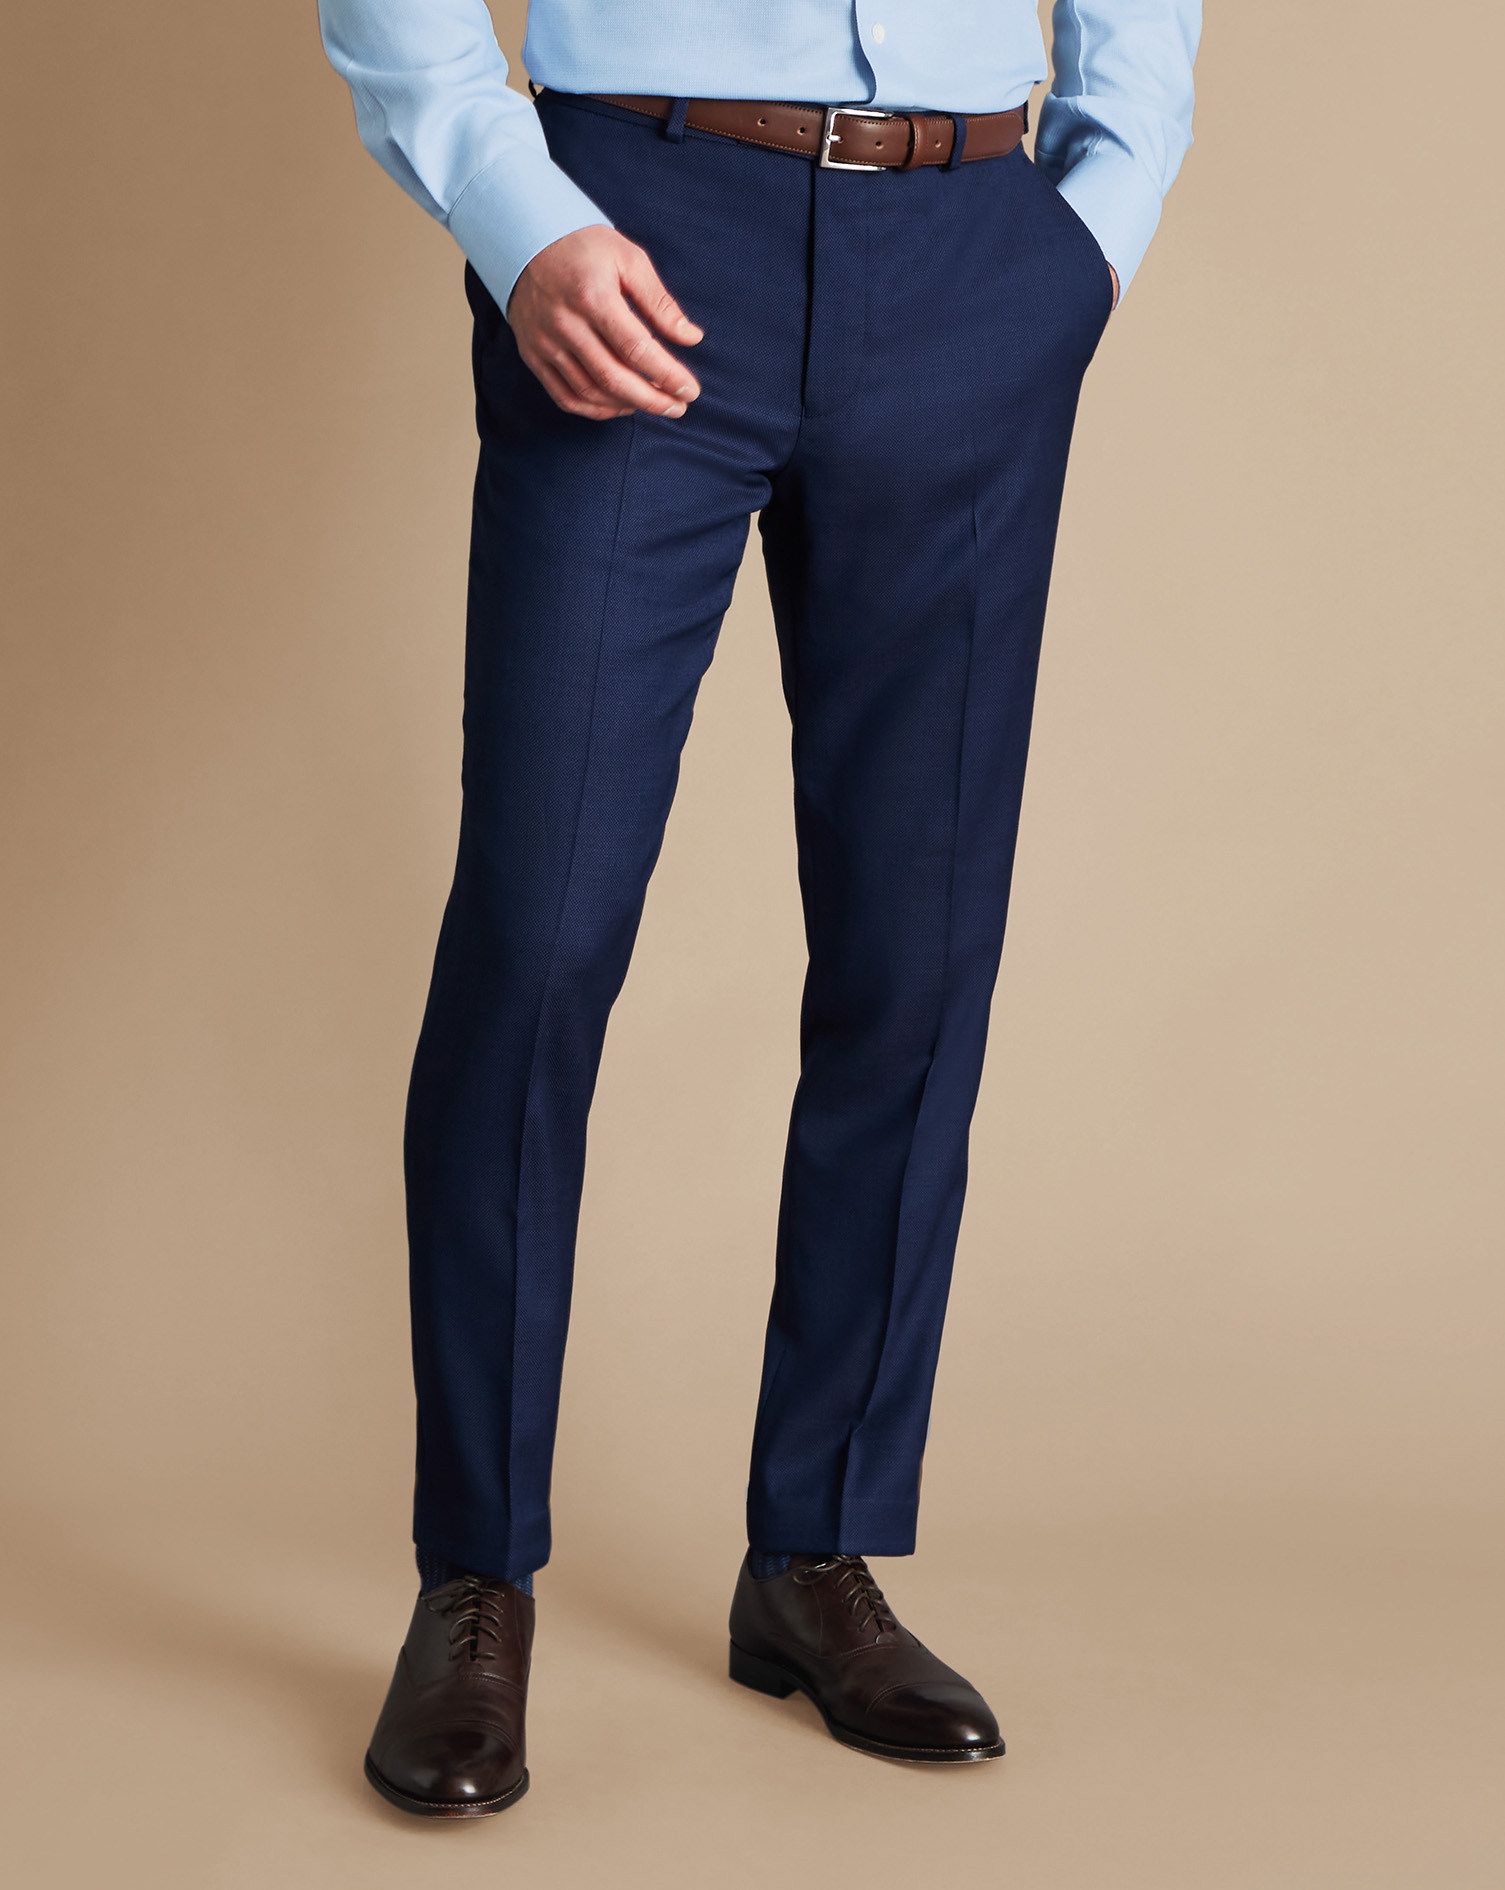 Men's Charles Tyrwhitt Ultimate Performance Birdseye Suit Trousers - Indigo Blue Size 32/30 Wool
